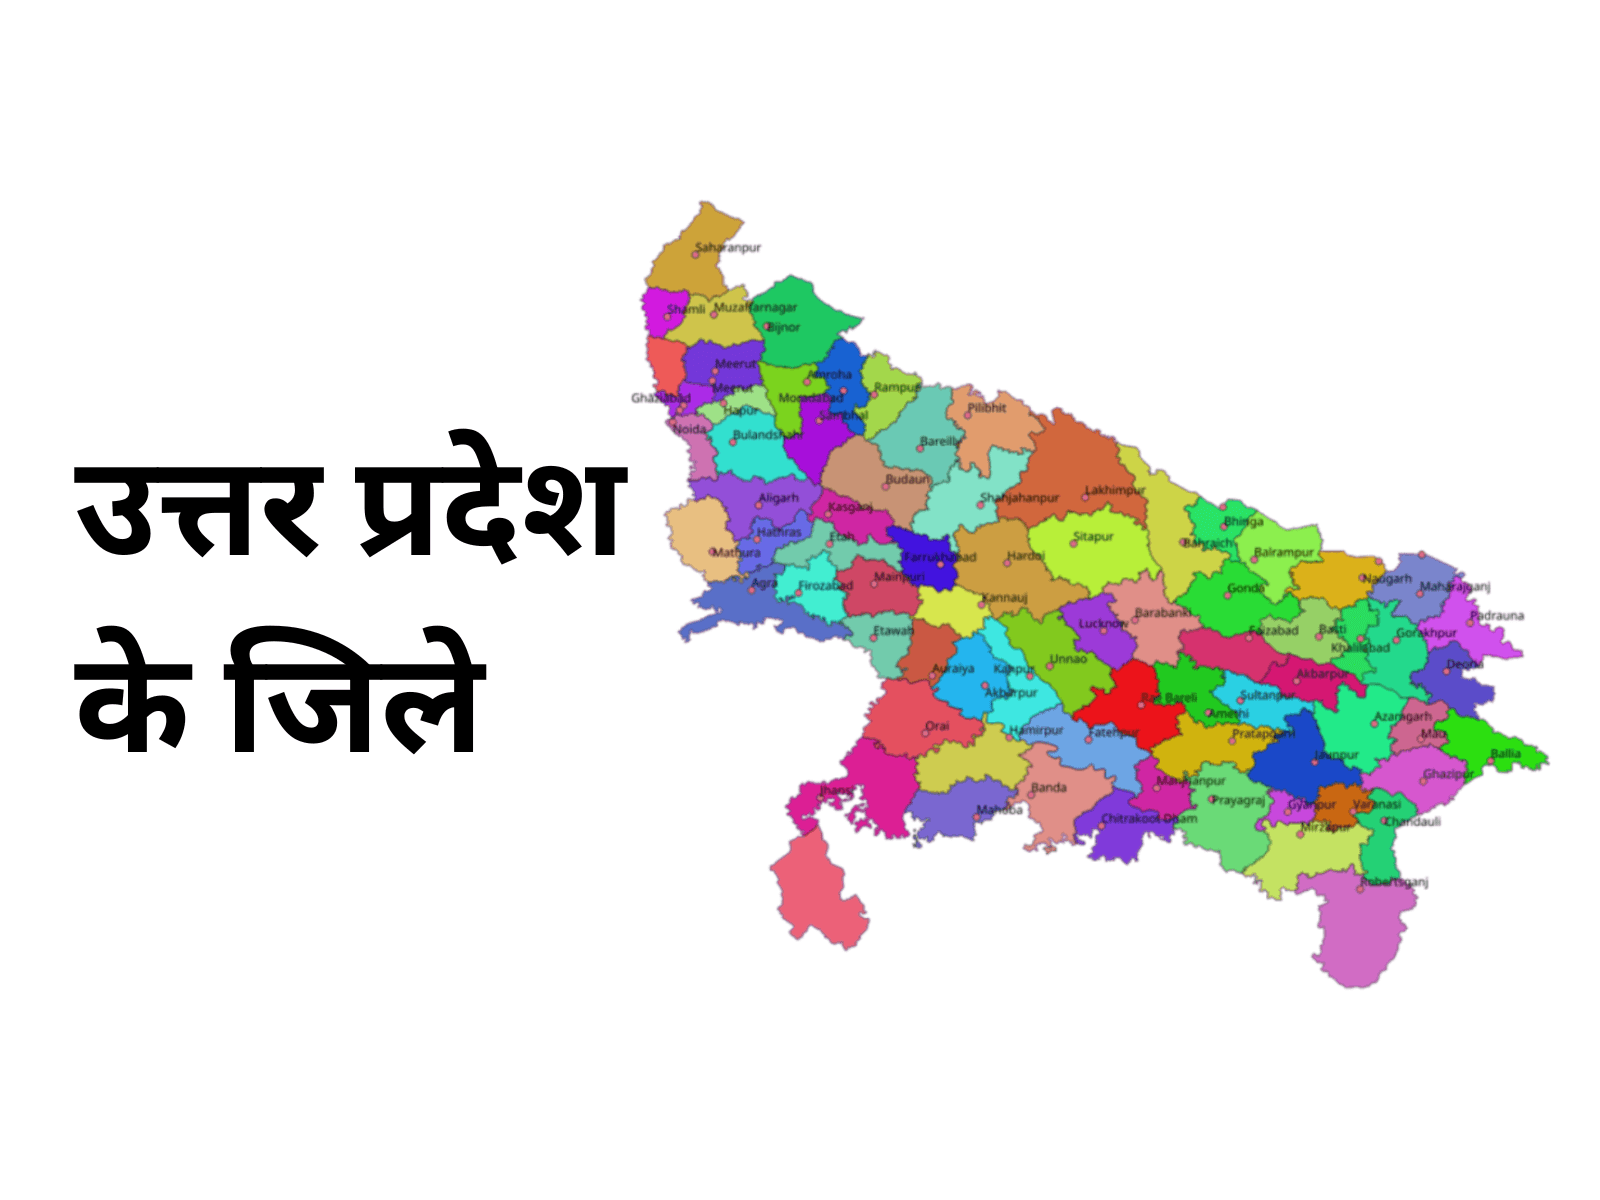 District of Uttar Prades map